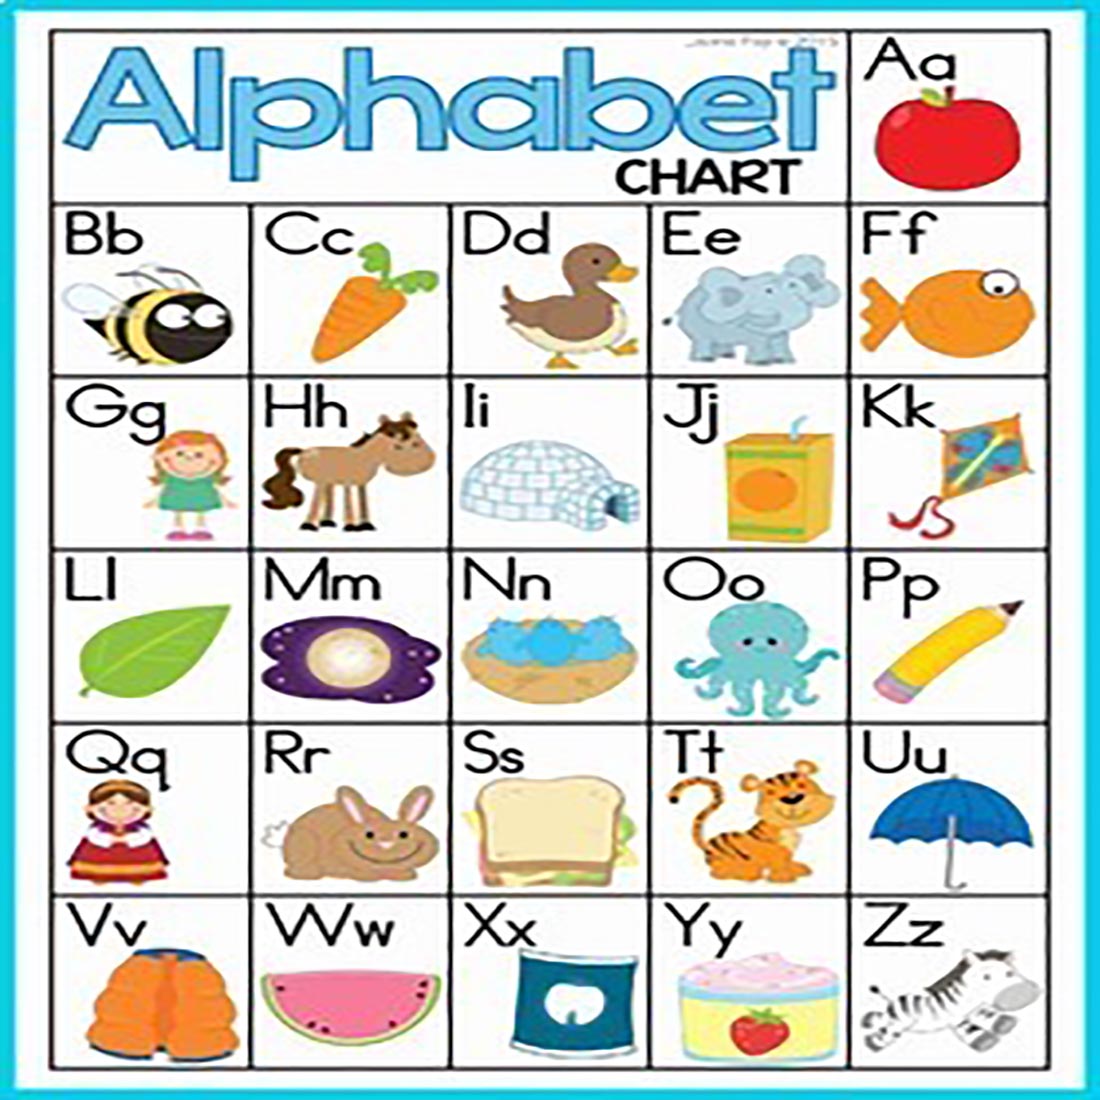 Alphabet and Letter Sounds Posters | Phonics Anchor Charts - MasterBundles